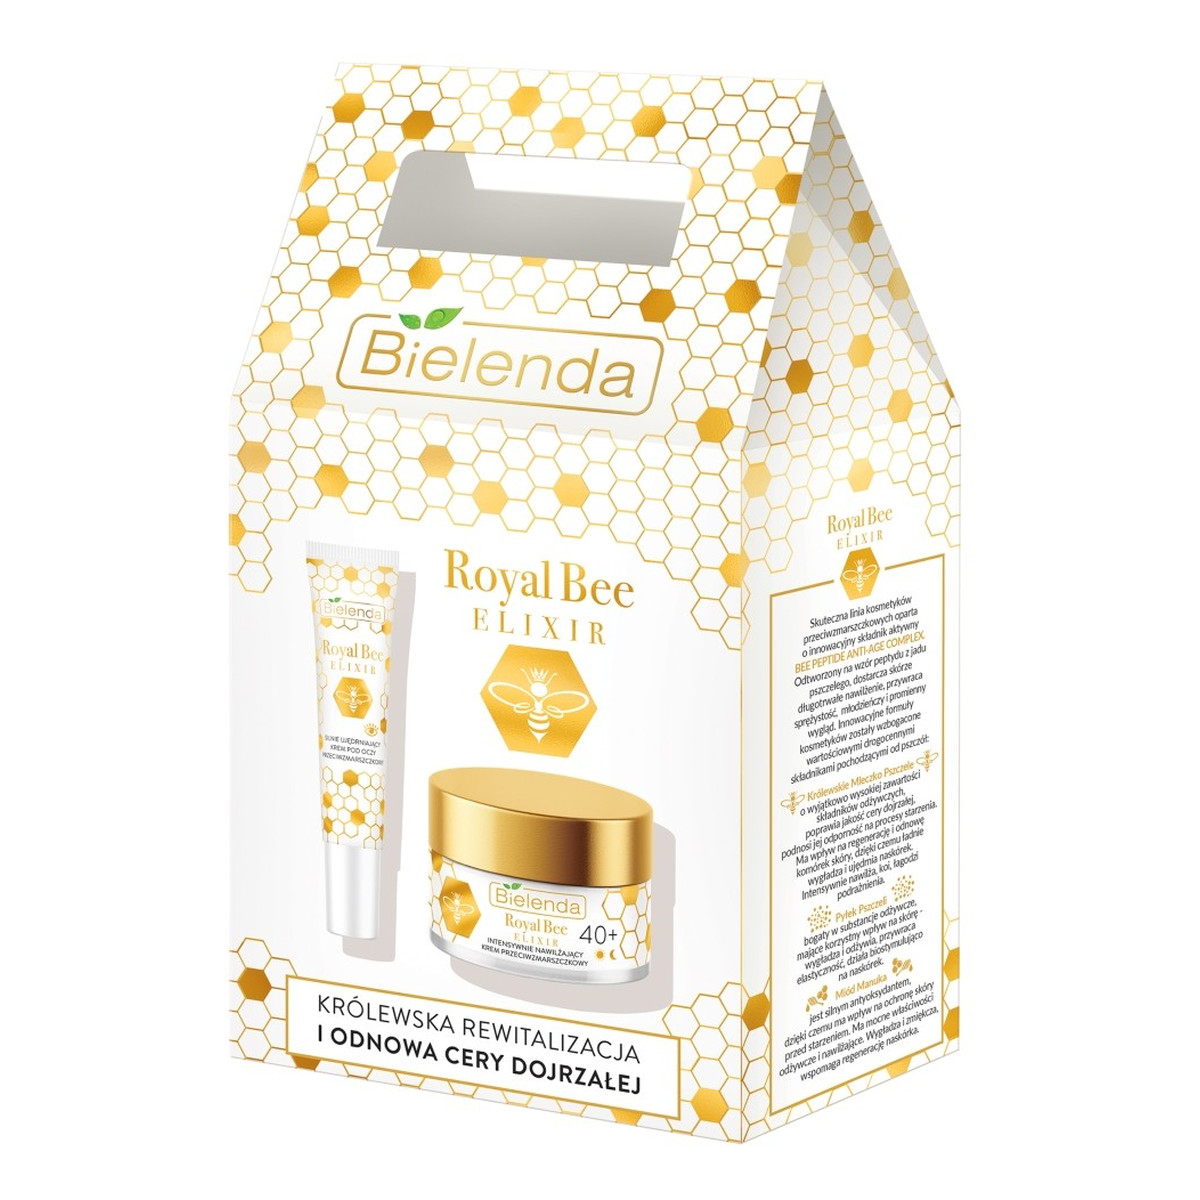 Bielenda Royal Bee Elixir Zestaw prezentowy 40+ 15ml